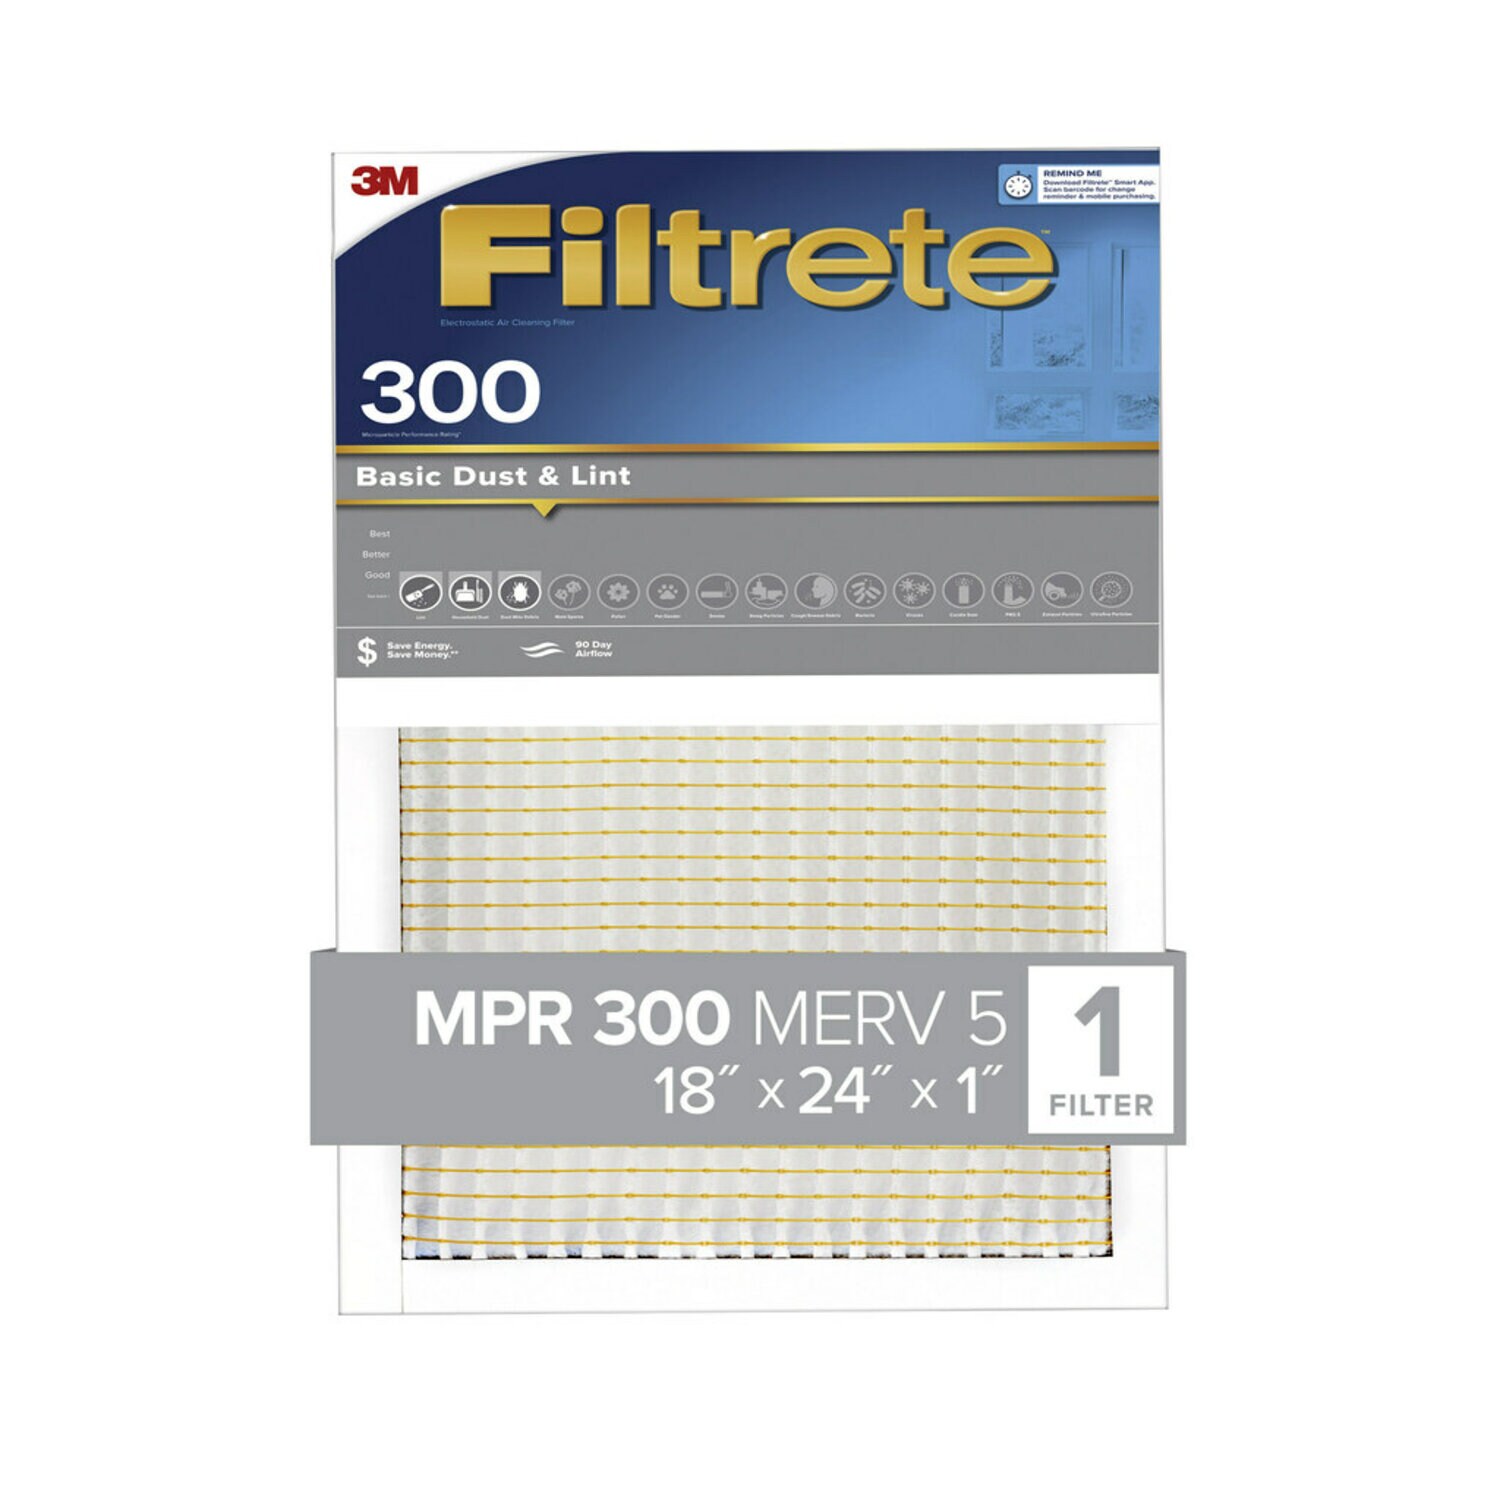 7100186853 - Filtrete Basic Dust & Lint Air Filter, 300 MPR, 321-4, 18 in x 24 in x
1 in (45.7 cm x 60.9 cm x 2.5 cm)